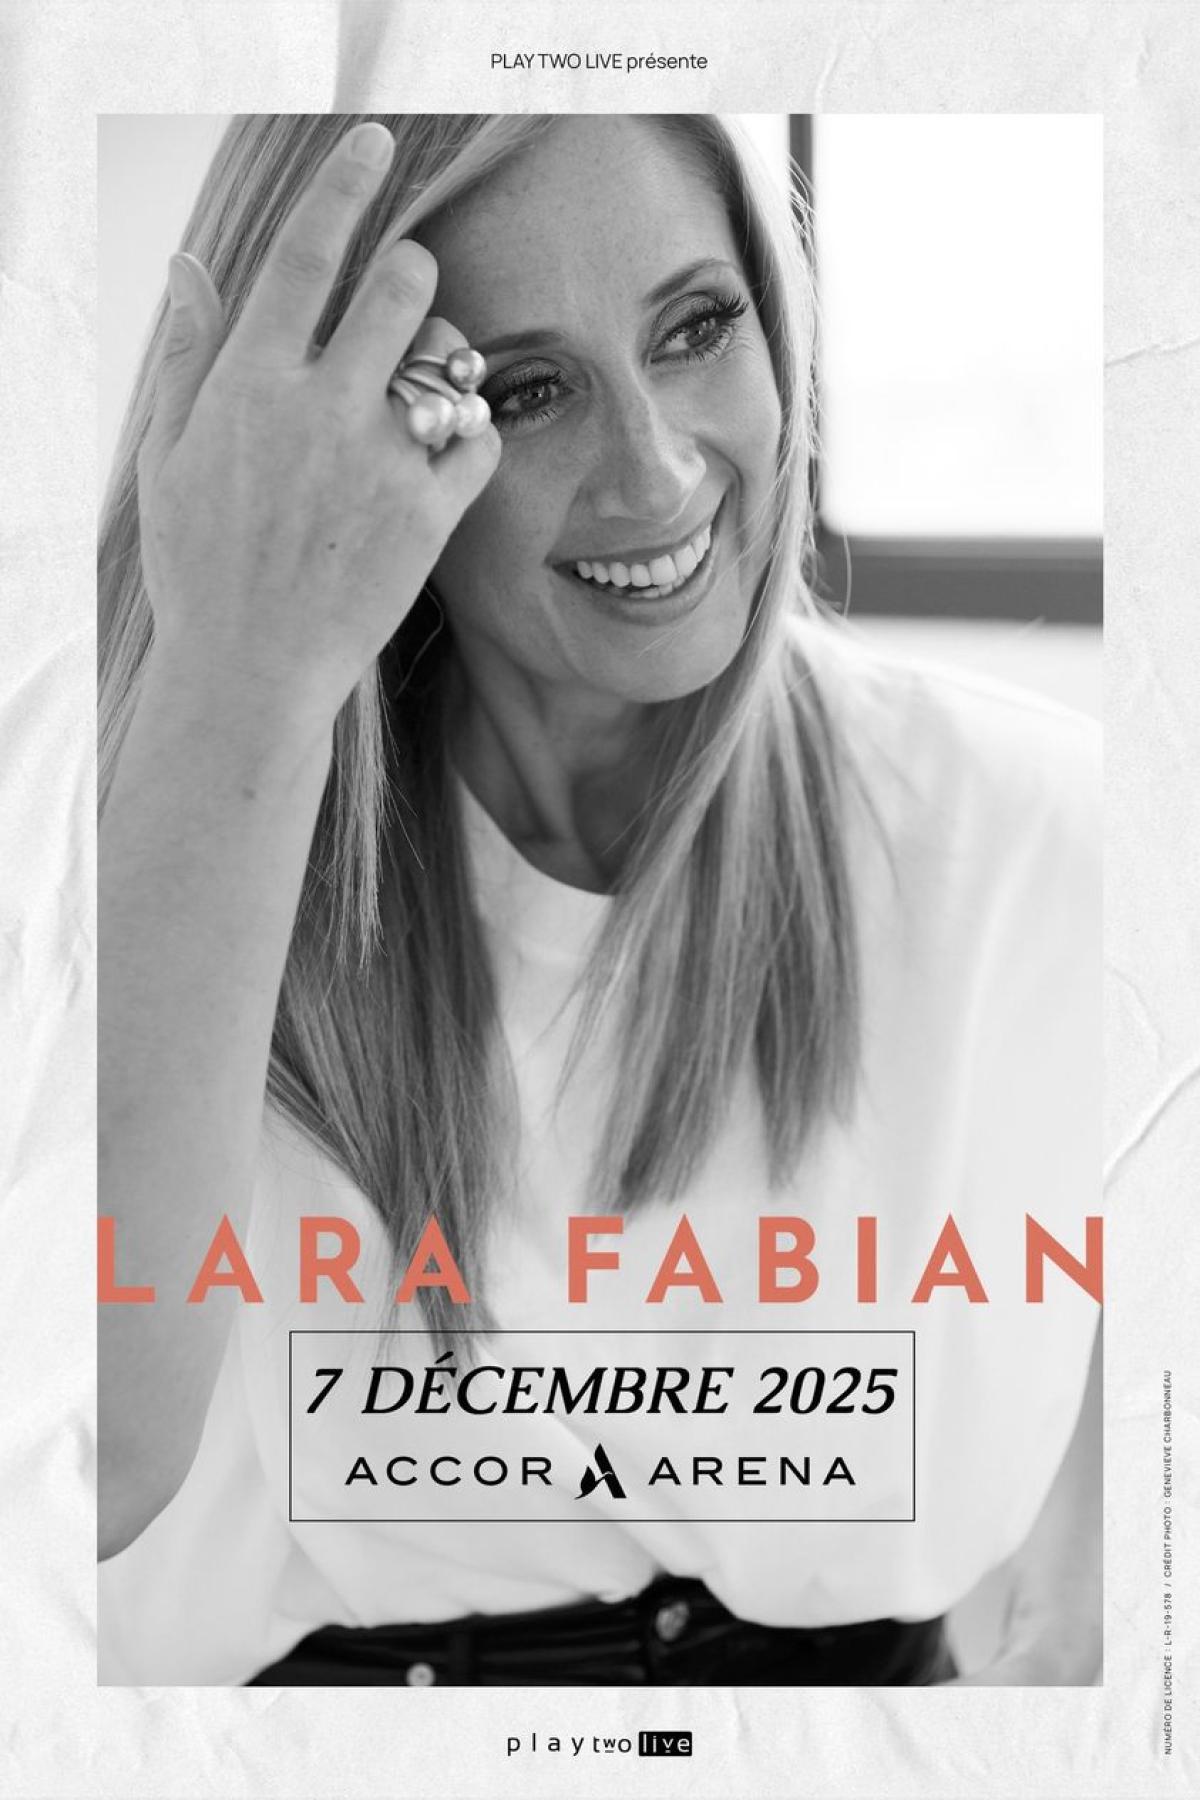 Lara Fabian en Accor Arena Tickets